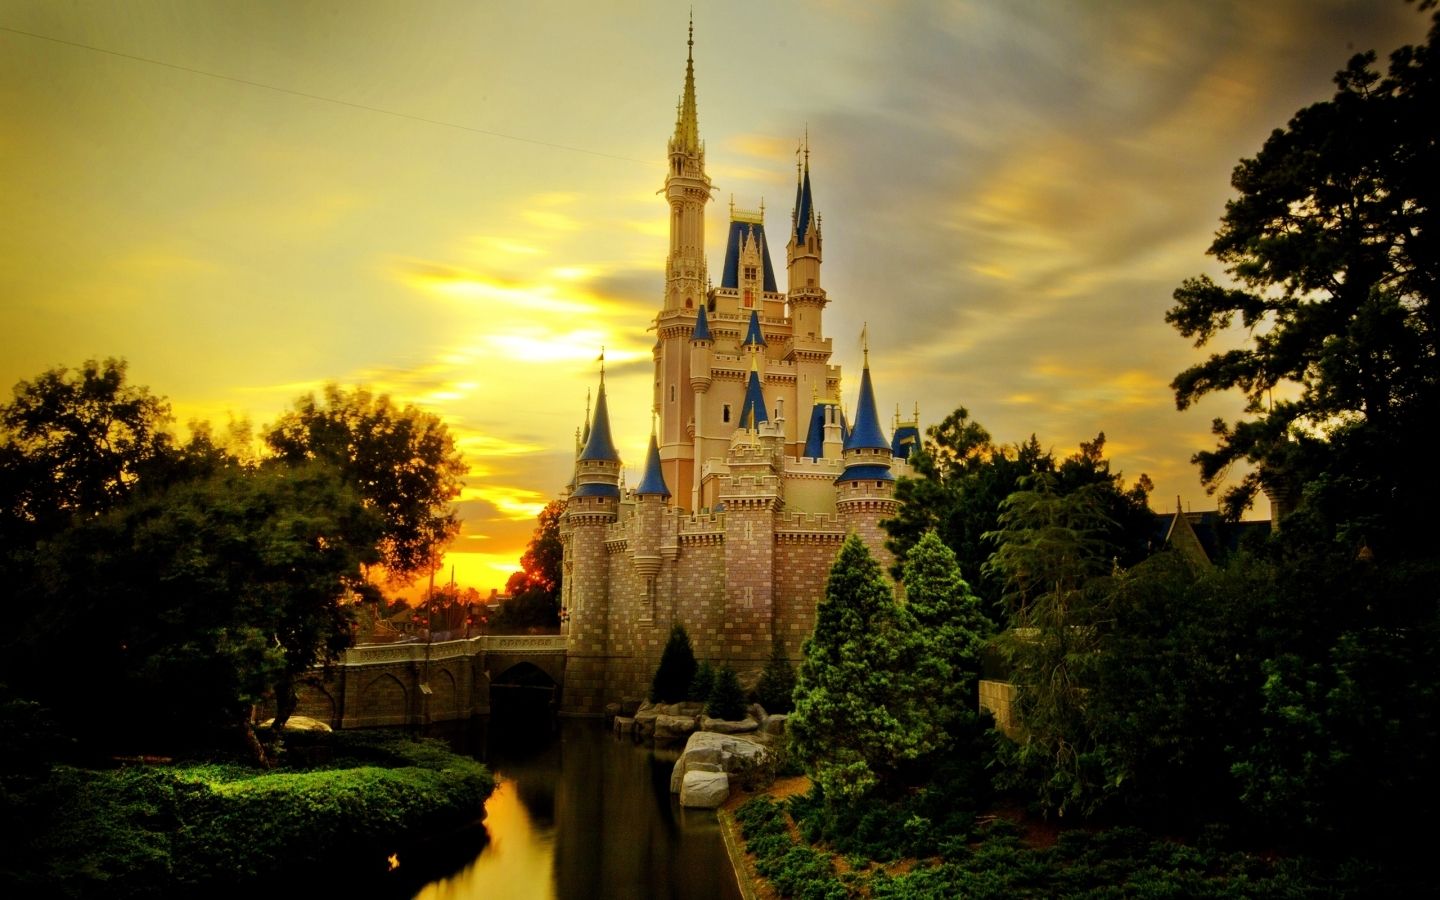 Cinderella Castle Mac Wallpaper Download | Free Mac Wallpapers ...